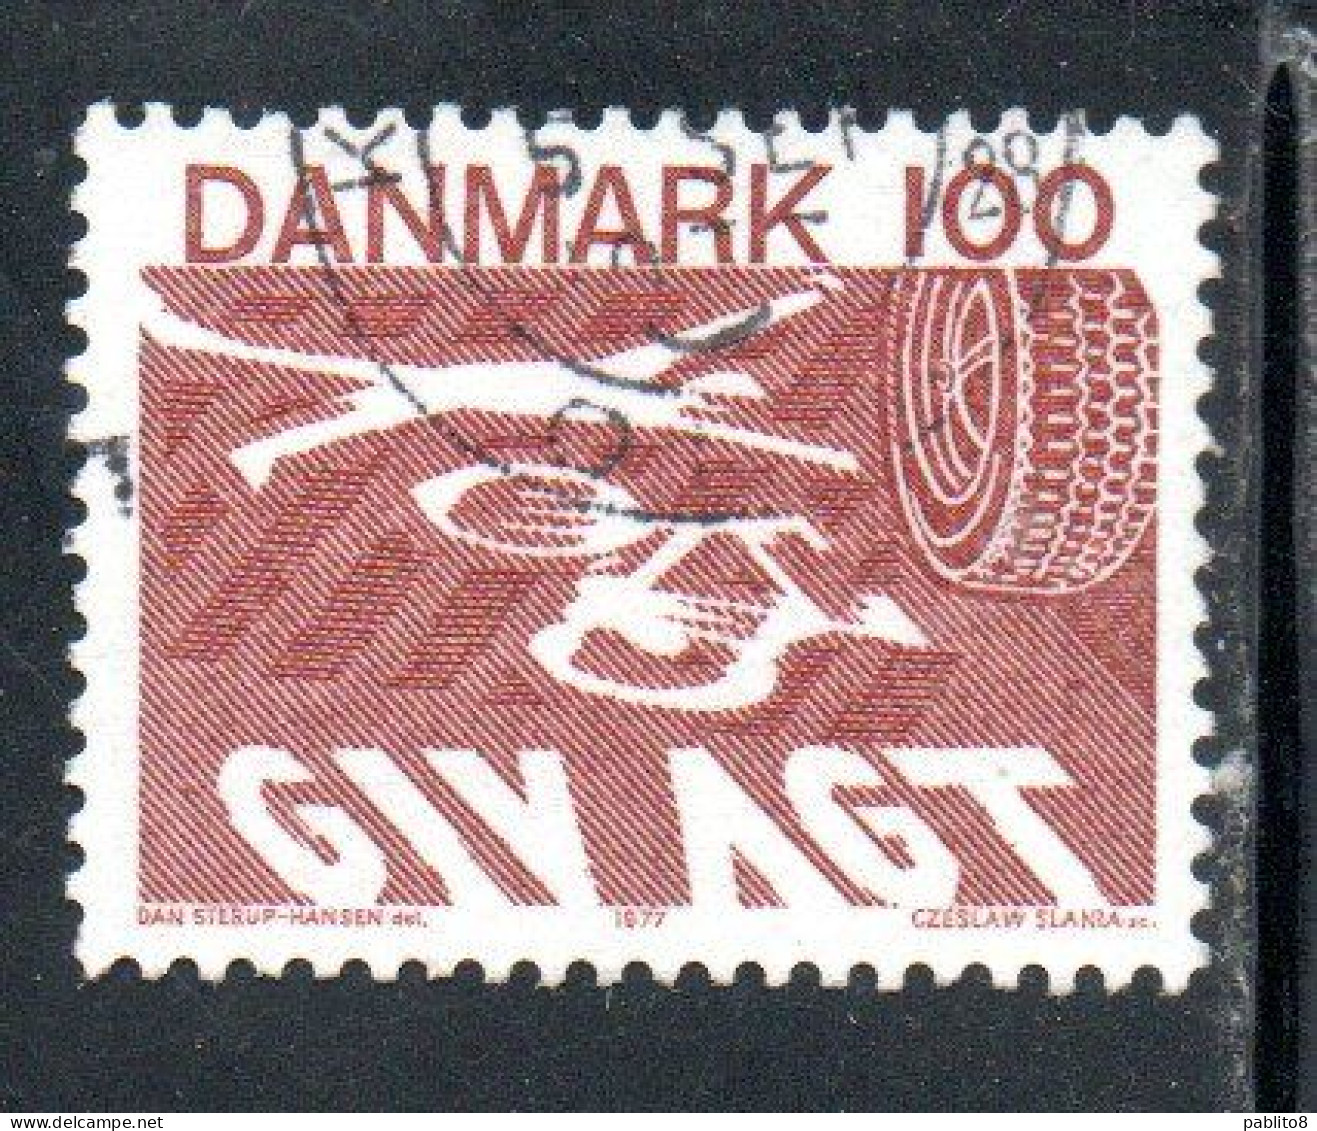 DANEMARK DANMARK DENMARK DANIMARCA 1976 ROAD SAFETY TRAFFIC ACT ACCIDENT 100o USED USATO OBLITERE' - Oblitérés